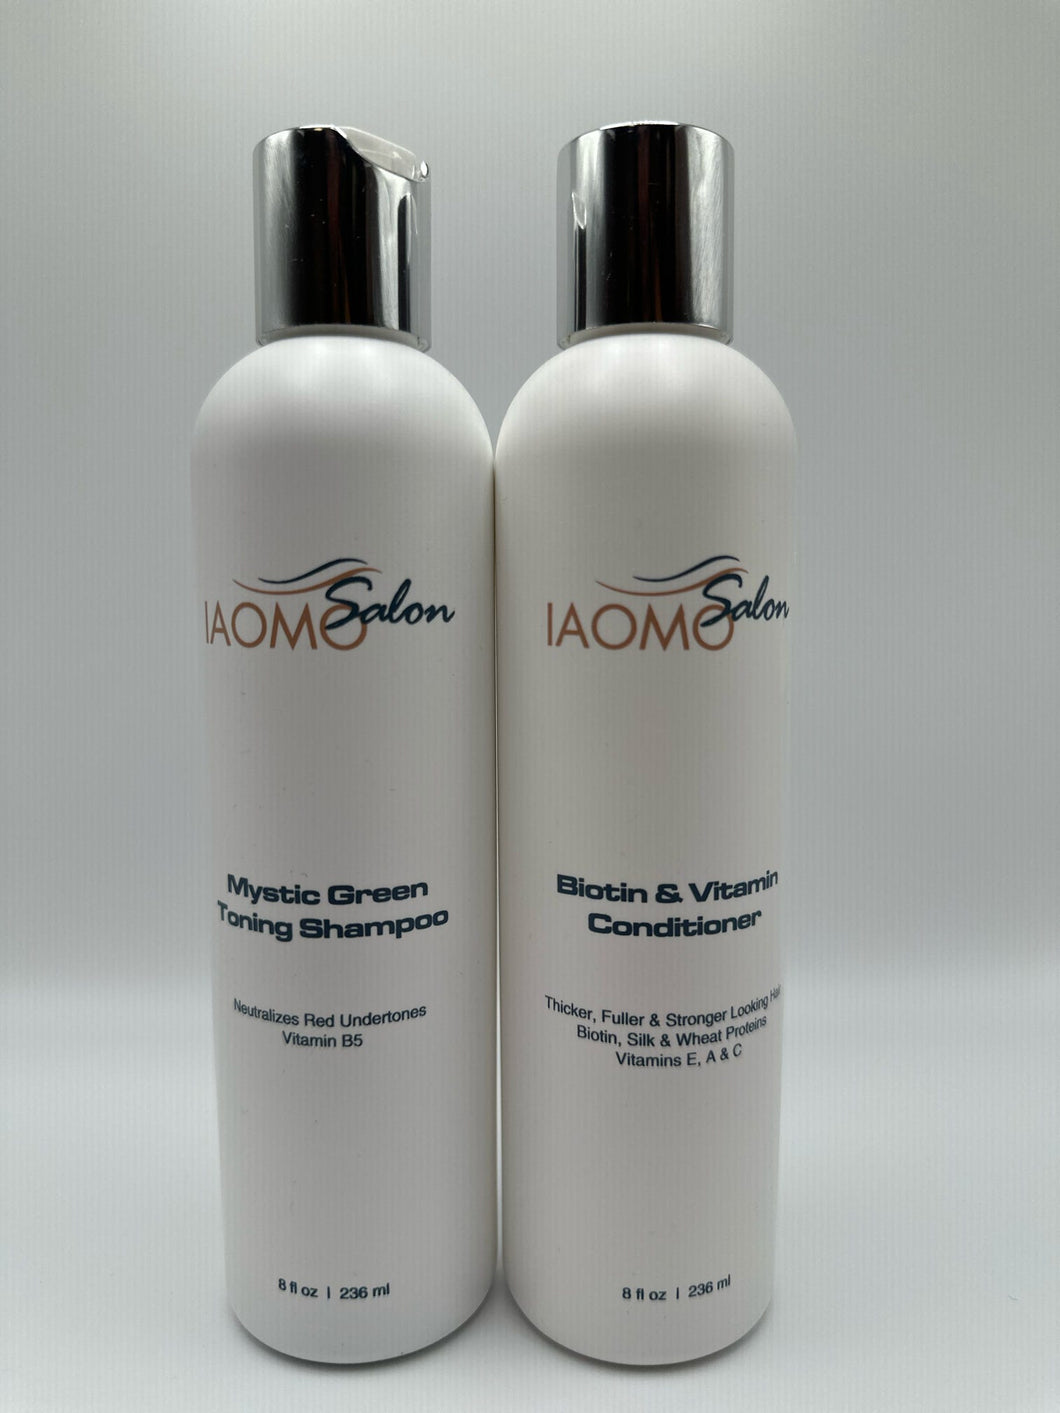 Mystic Green Toning Shampoo and Biotin/Vitamin Conditioner DUO - Salon Iaomo